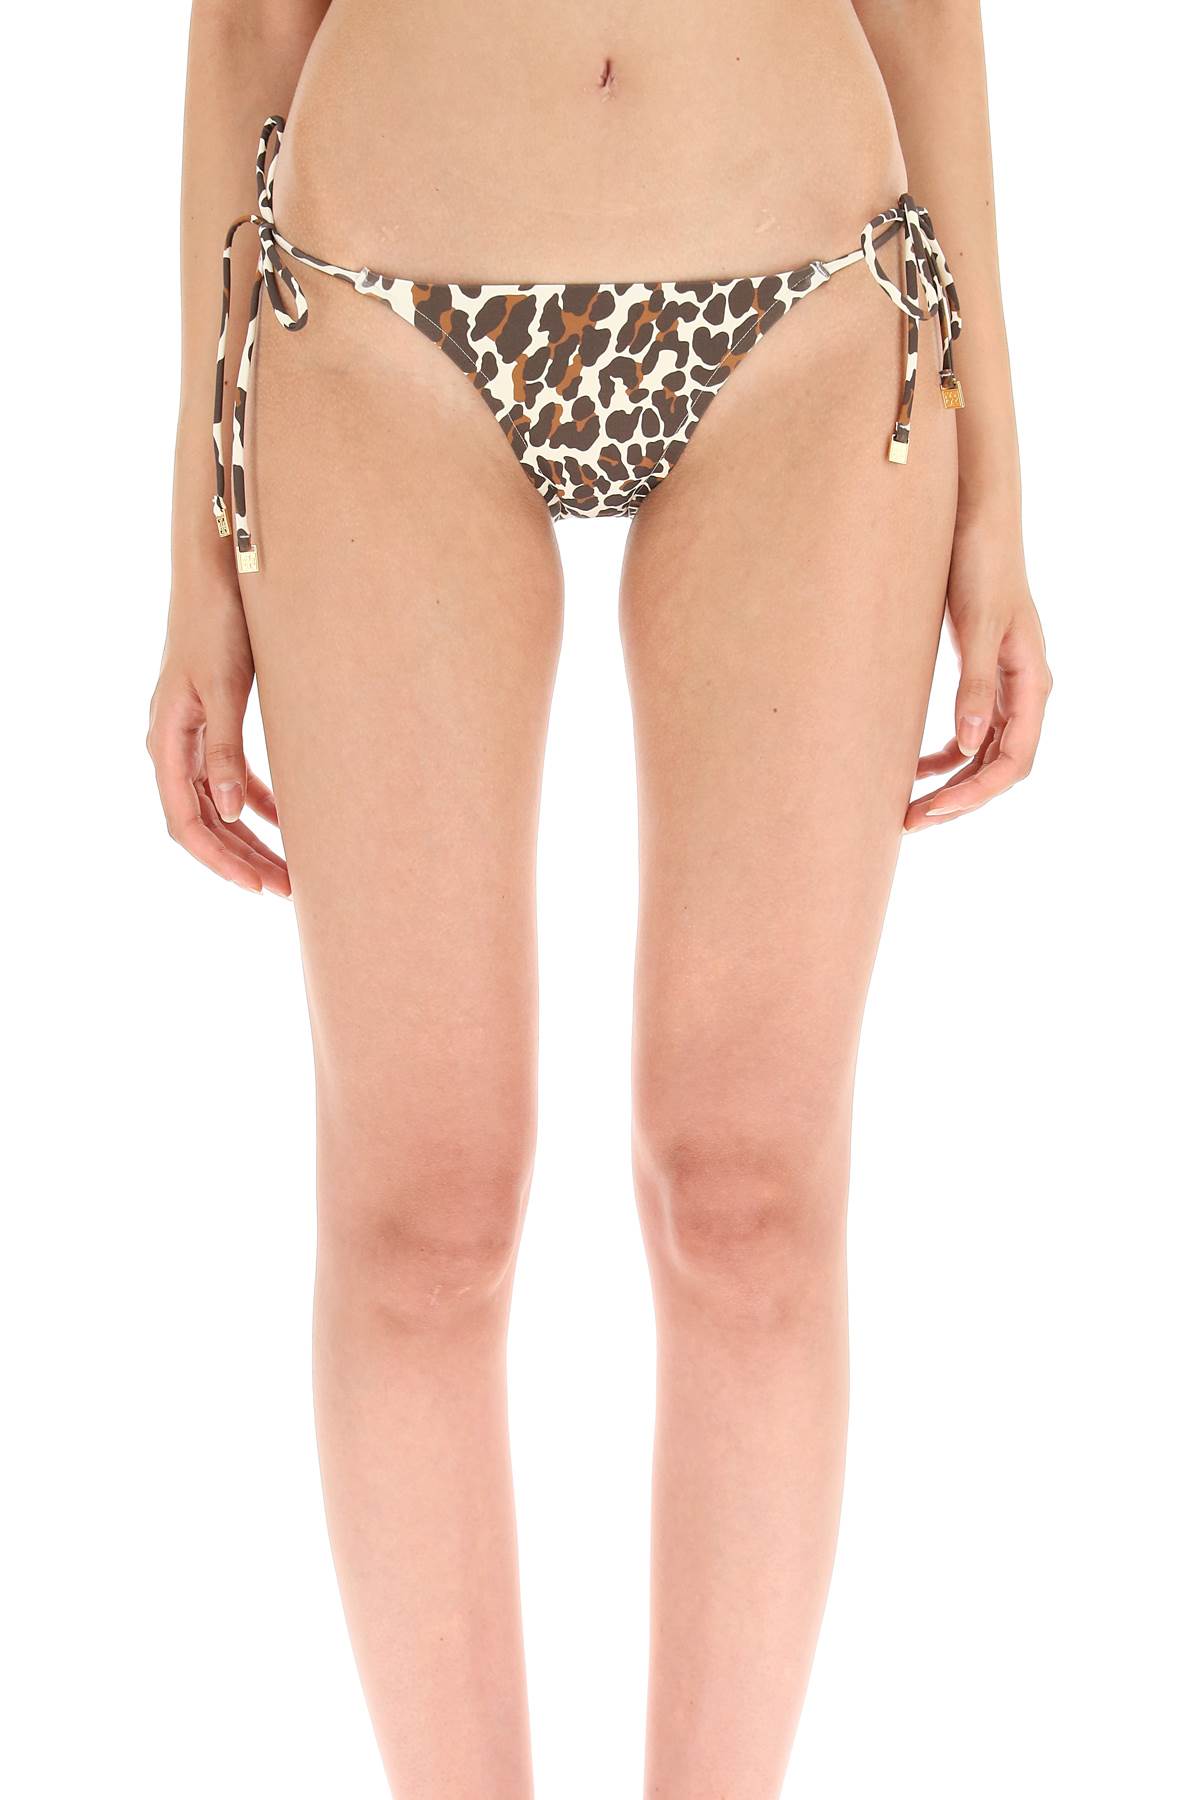 Tory Burch Tory burch leopard print bikini bottom